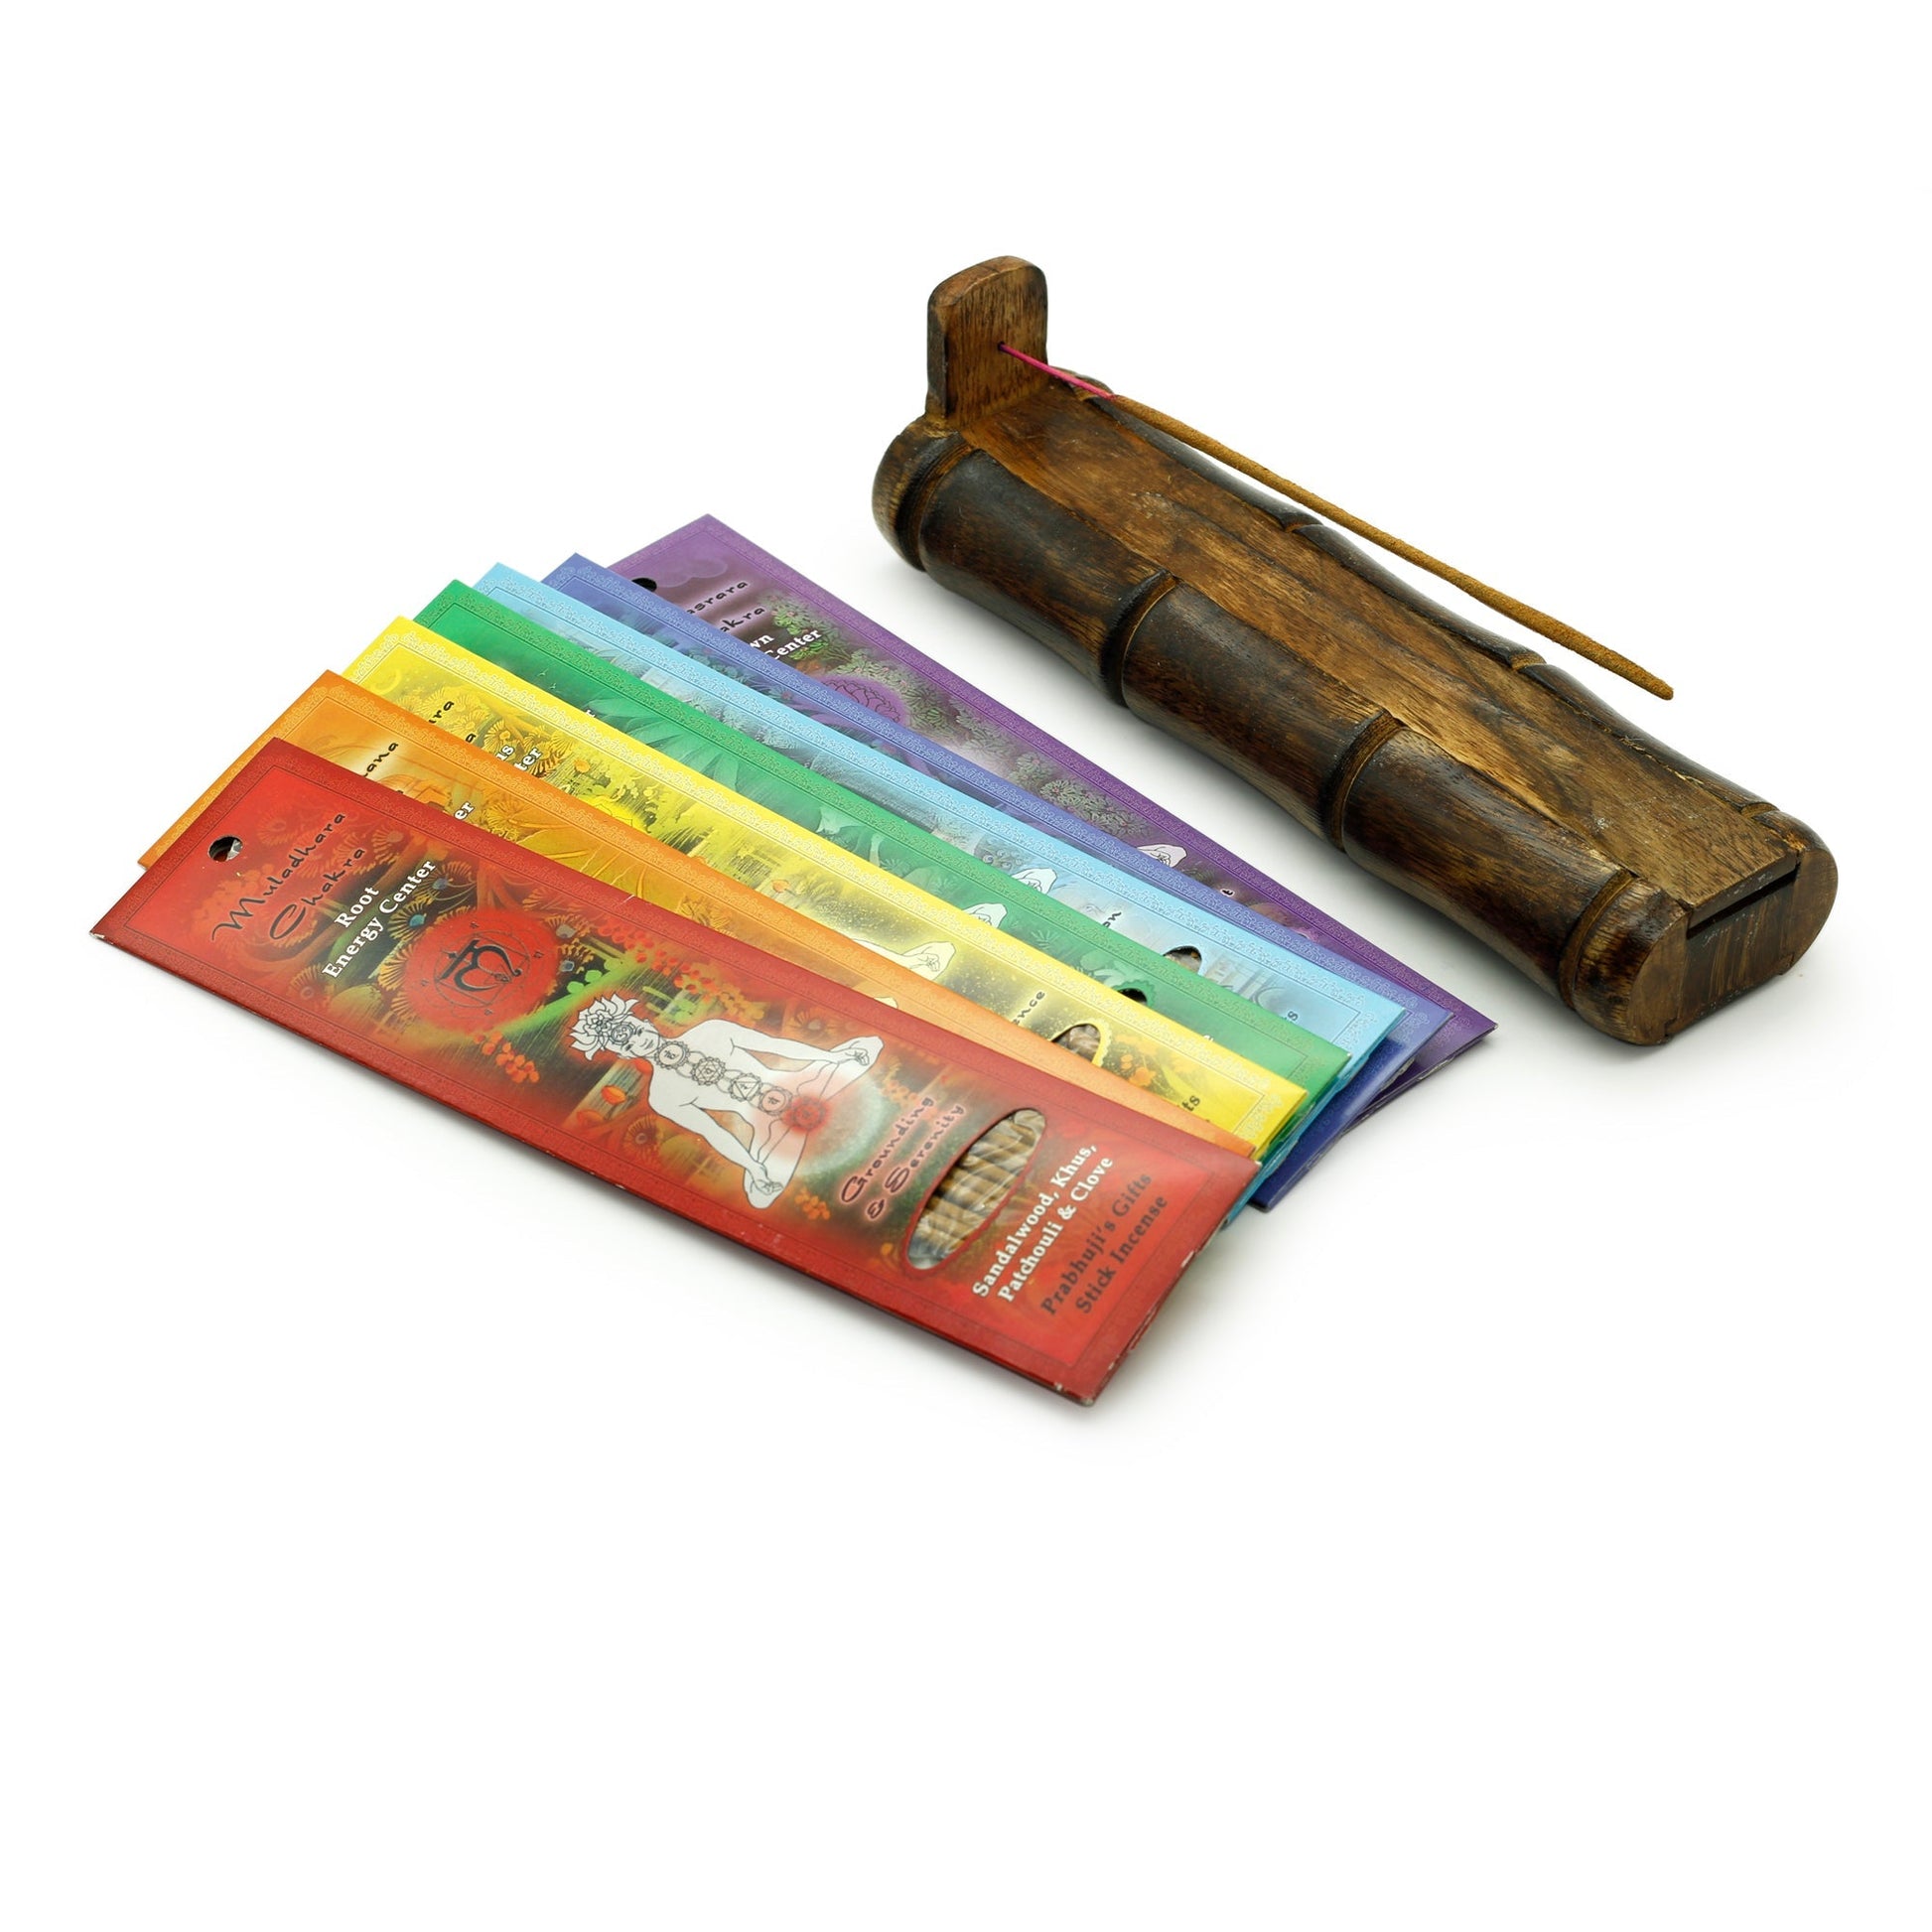 Incense Gift Set - Bamboo Burner + 7 chakra incense stick & Greeting: May Love, Light, Peace & ... Always - Tree Spirit Wellness